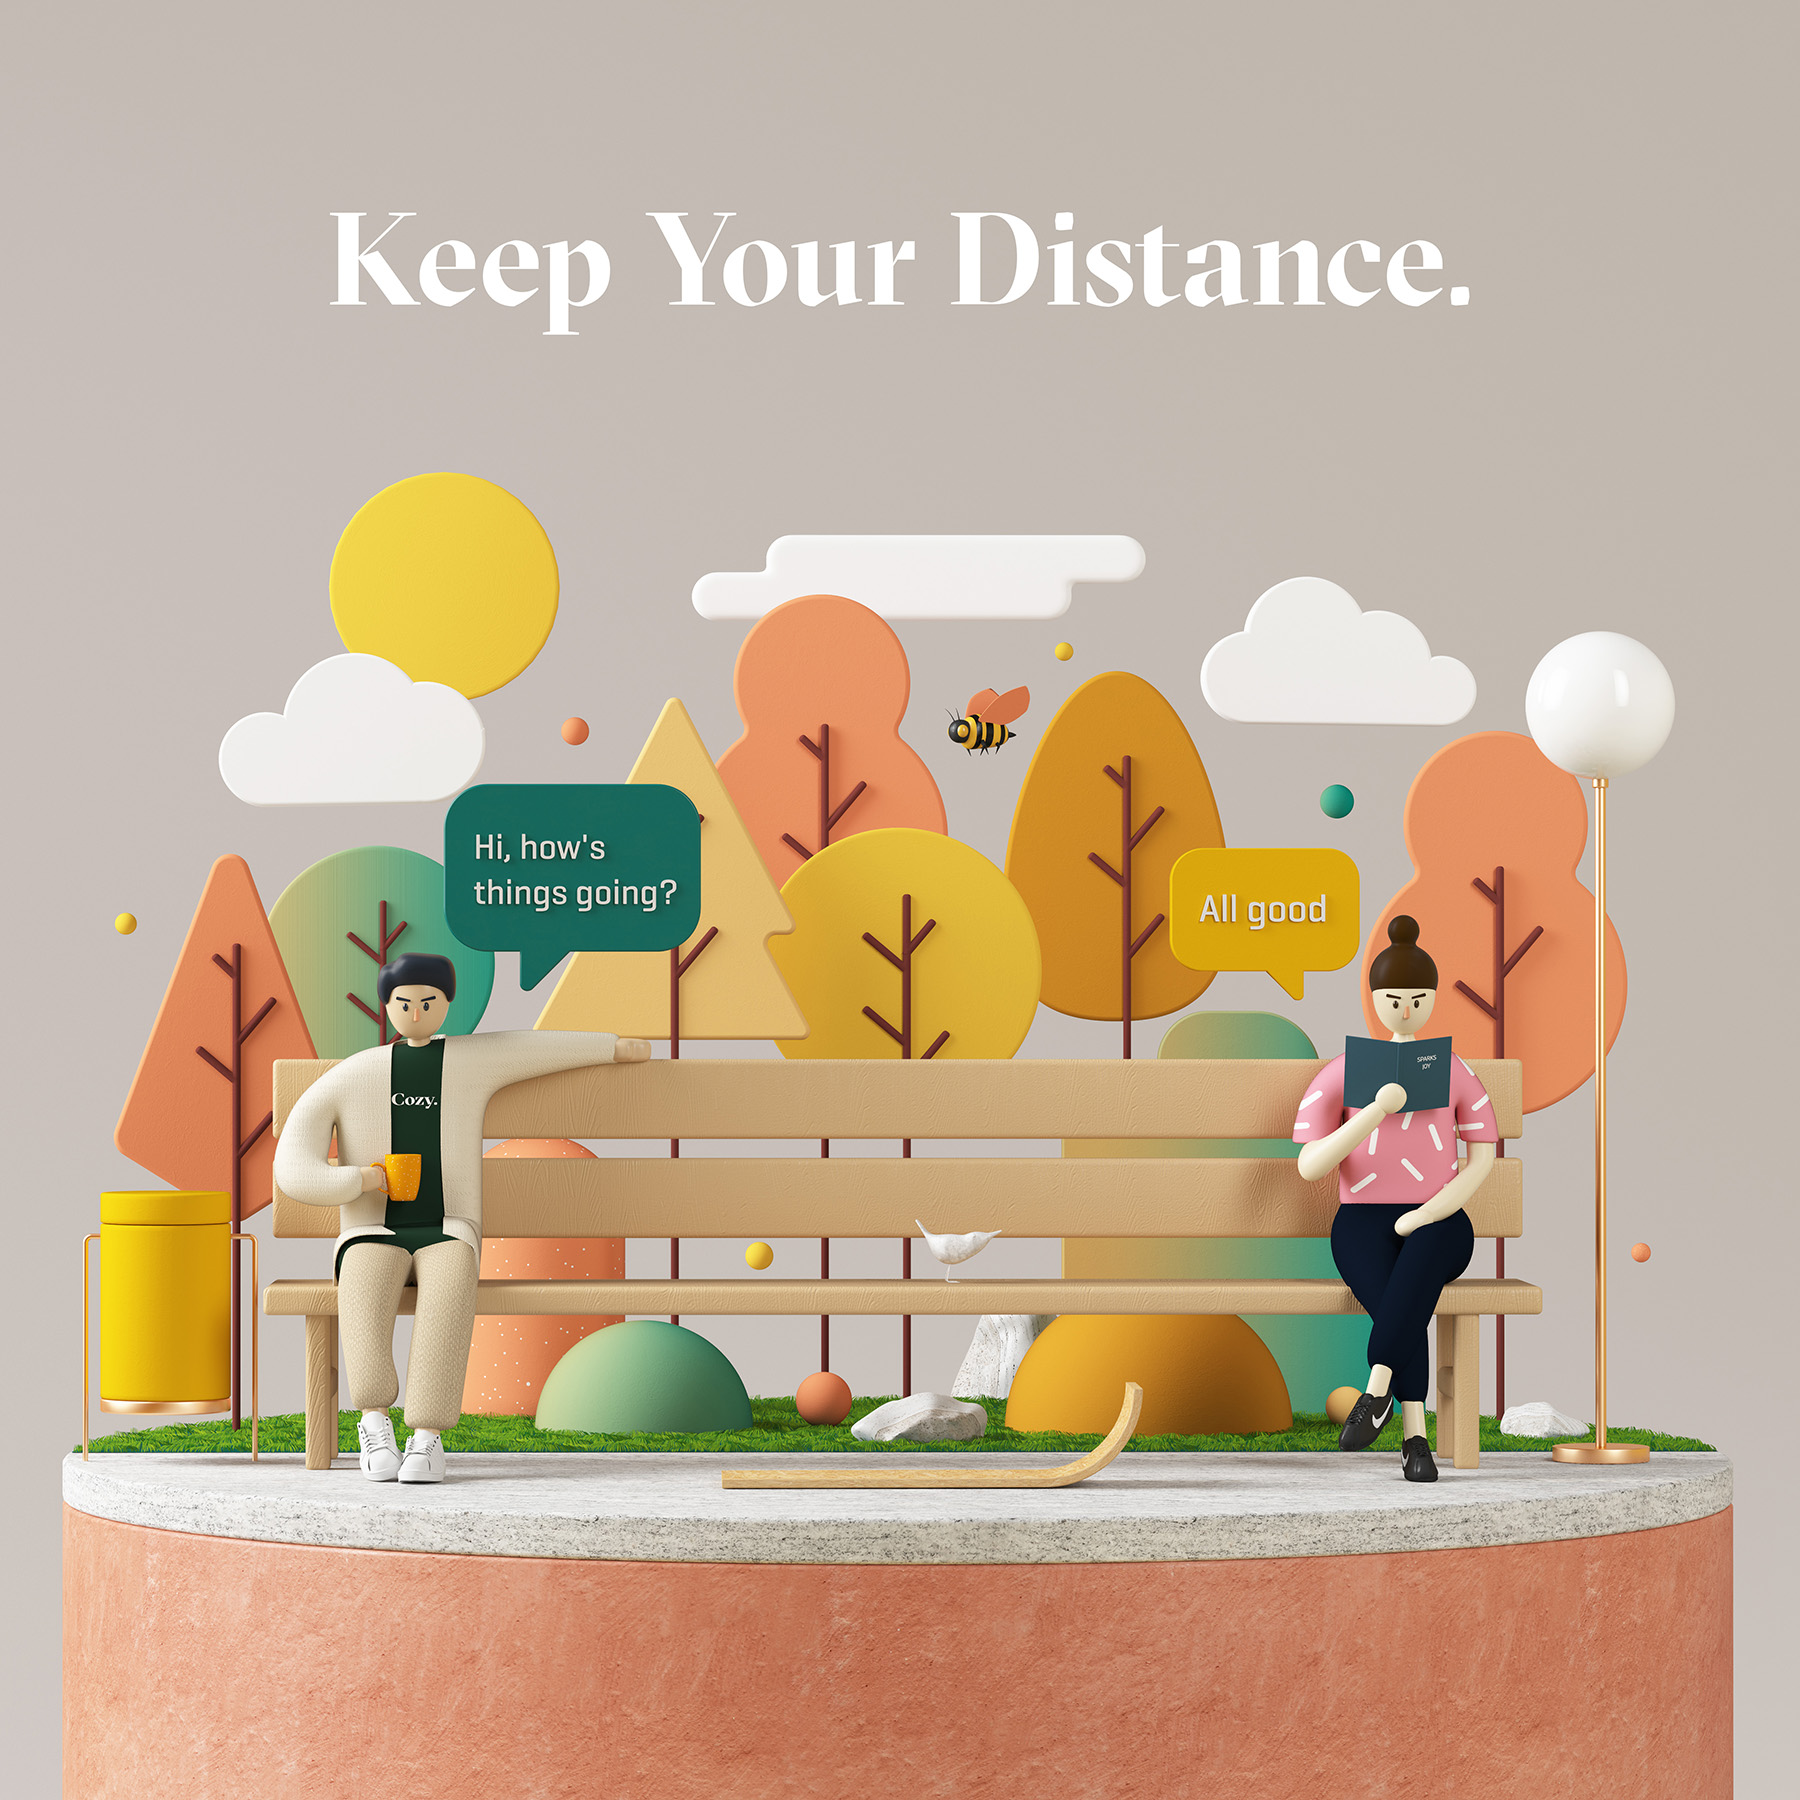 keep distance